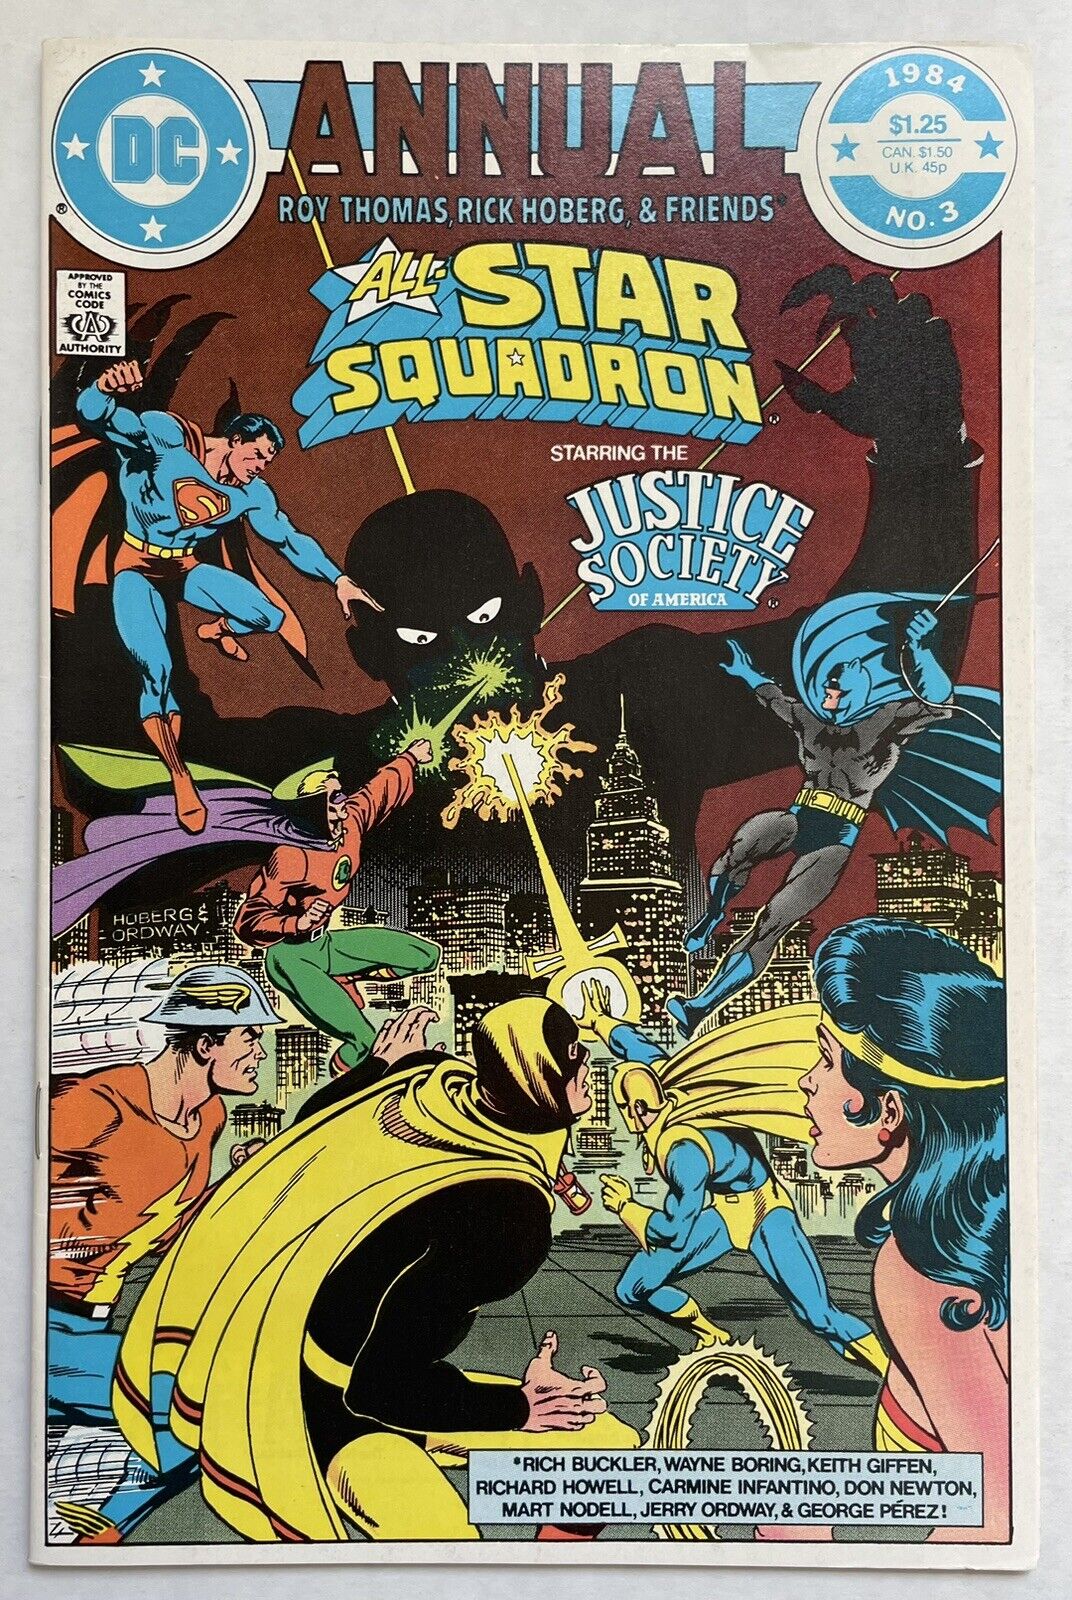 ALL STAR SQUADRON ANNUAL #3 (DC 1984) Justice Society • Giffen, Perez • VF/NM